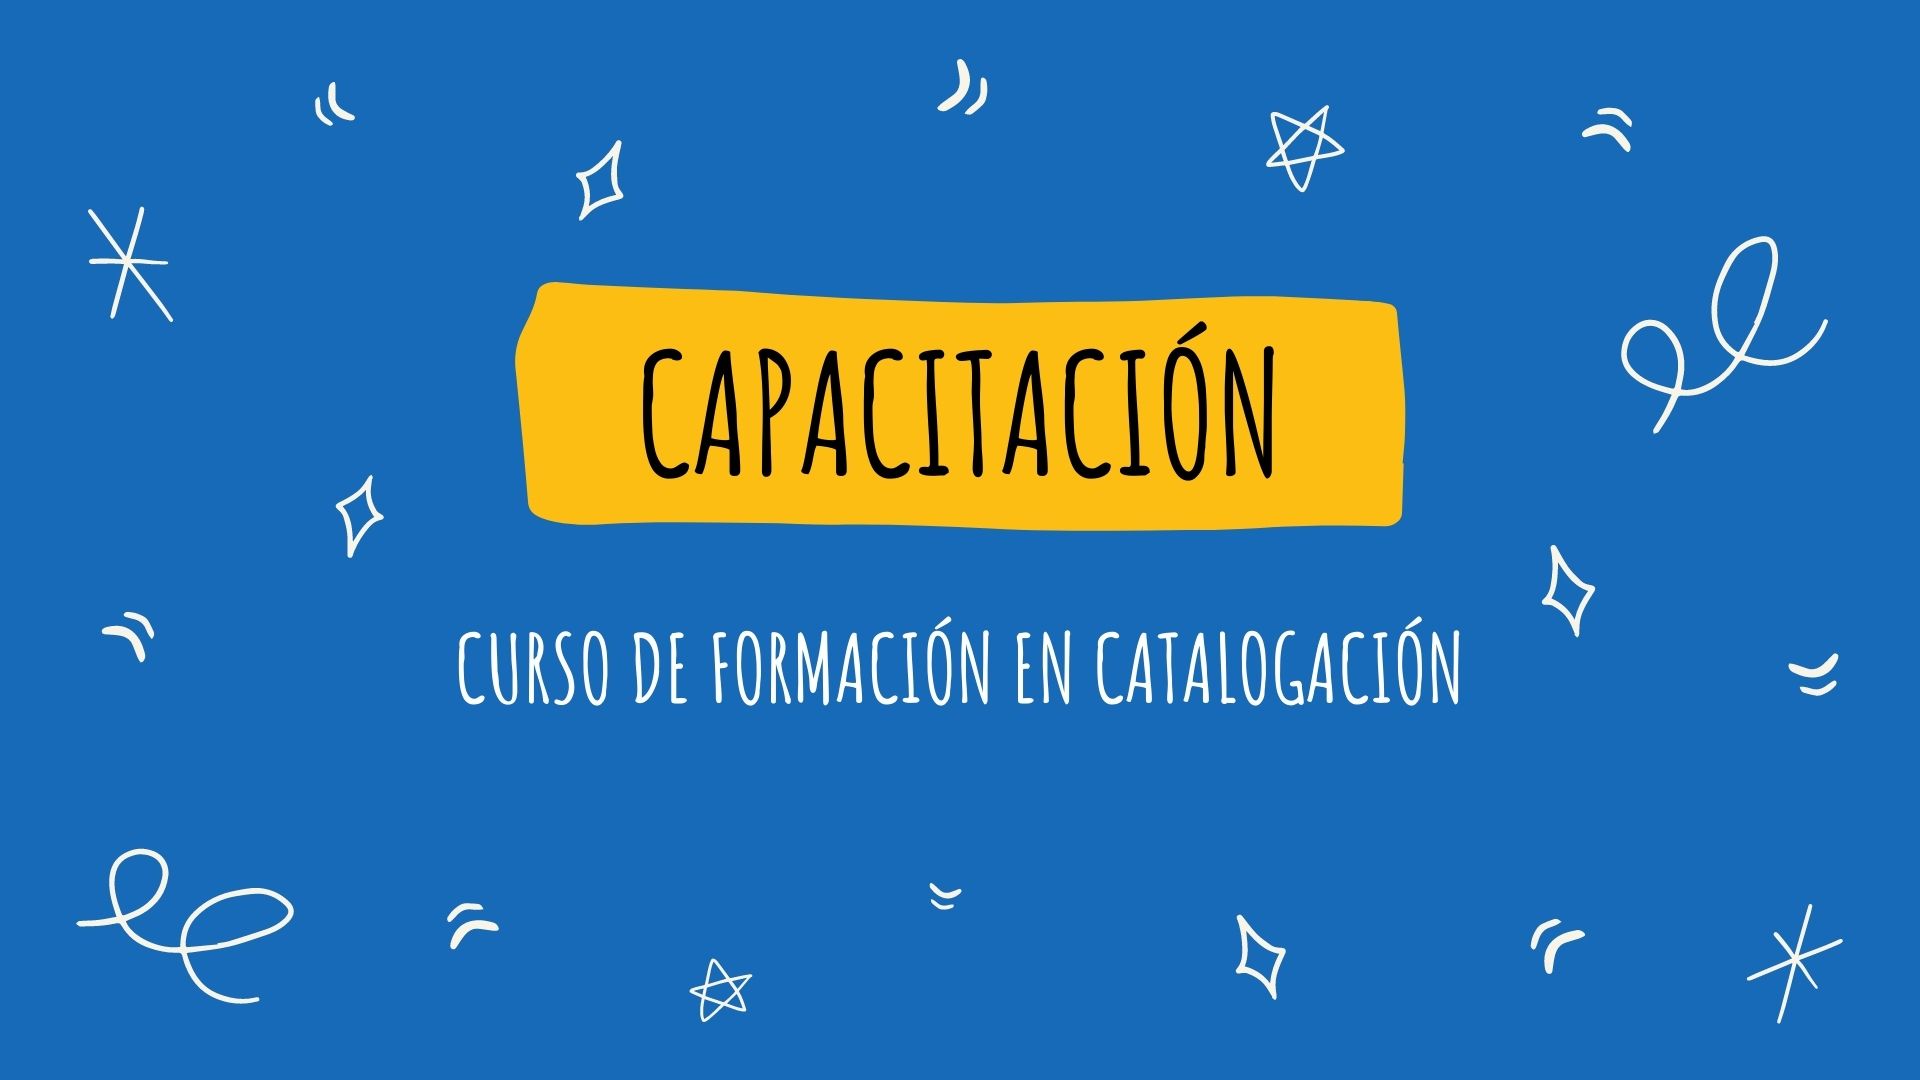 Catalogacion.jpg